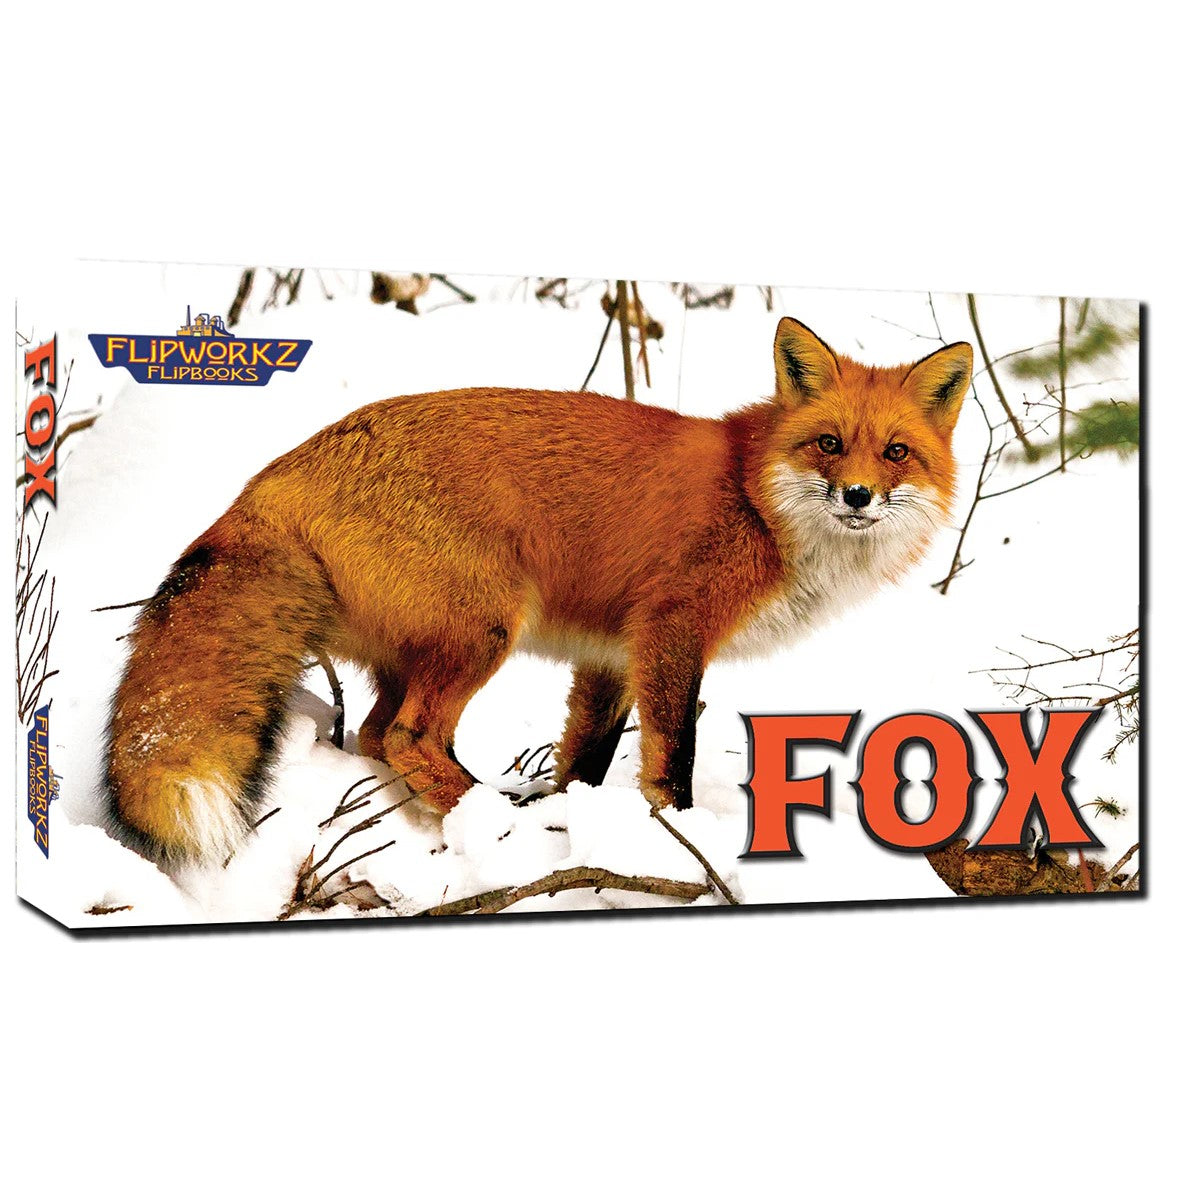 Fox Flipbook